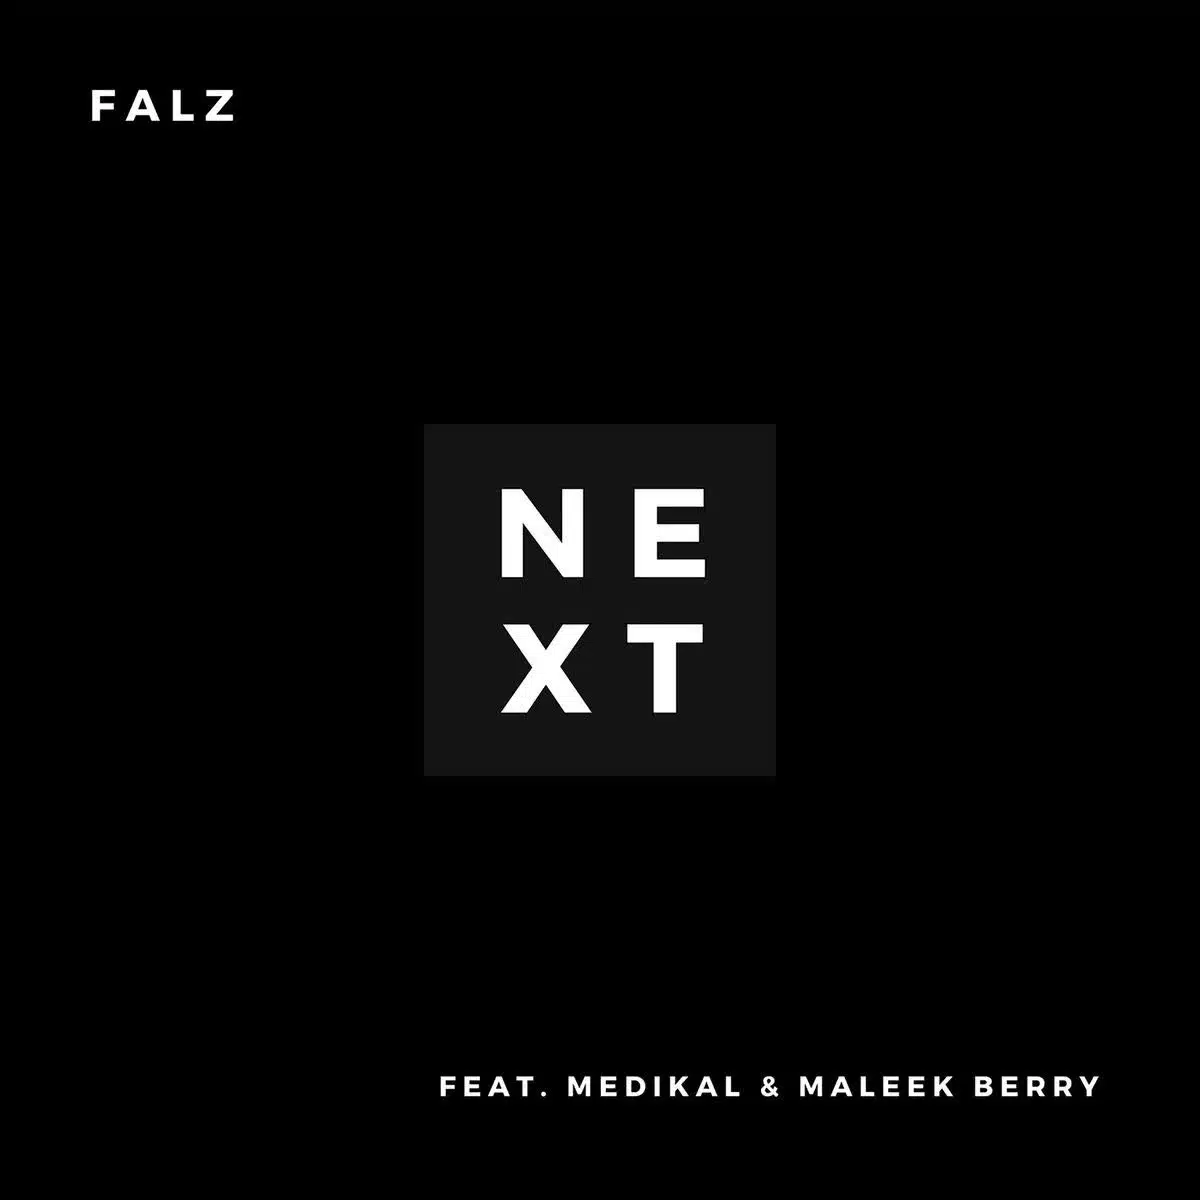 DOWNLOAD: Falz Ft. Medikal & Maleek Berry – “Next” Mp3